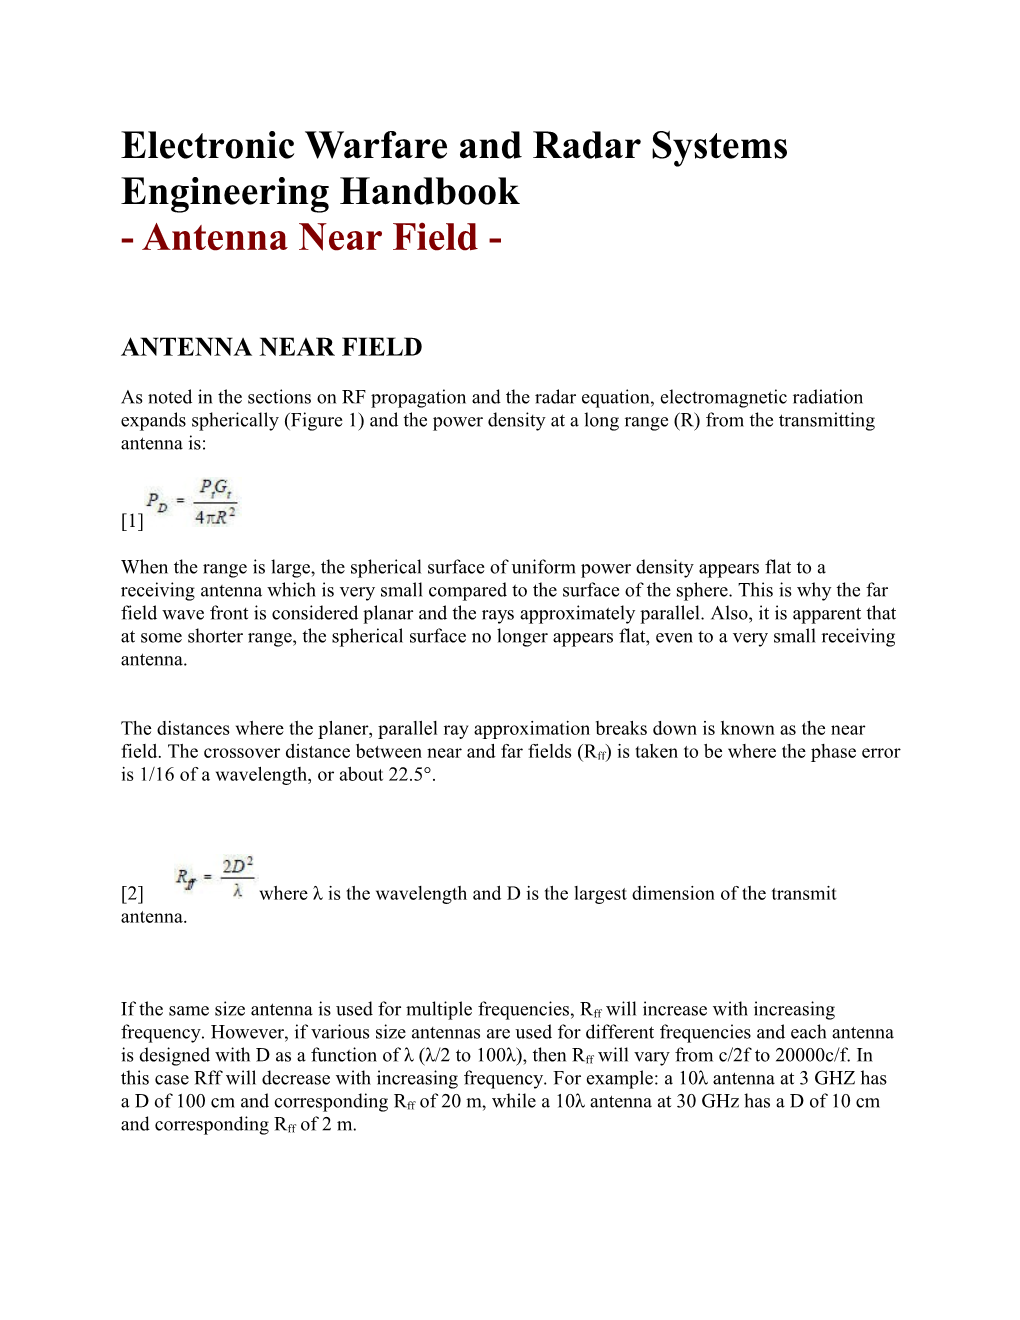 Electronic Warfare and Radar Systems Engineering Handbook - Antenna Near Field